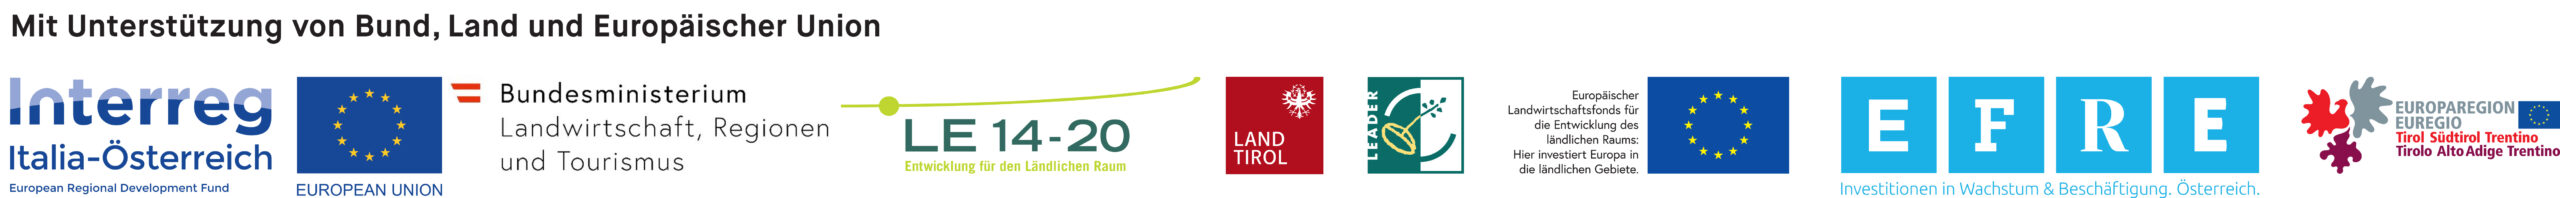 Logoleiste Interreg-Förderung